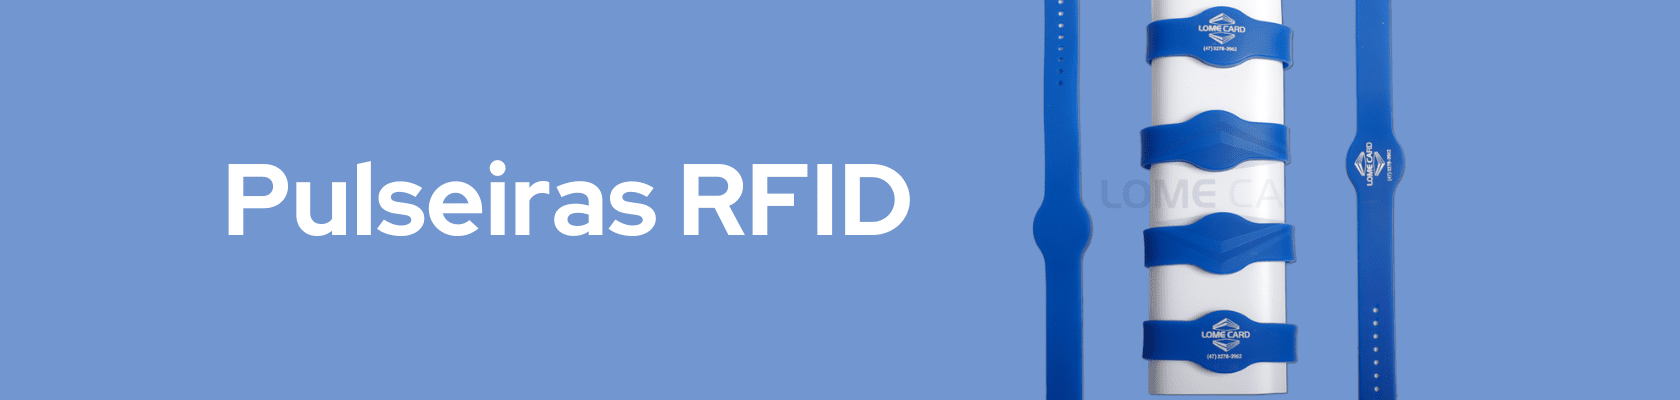 Pulseira RFID